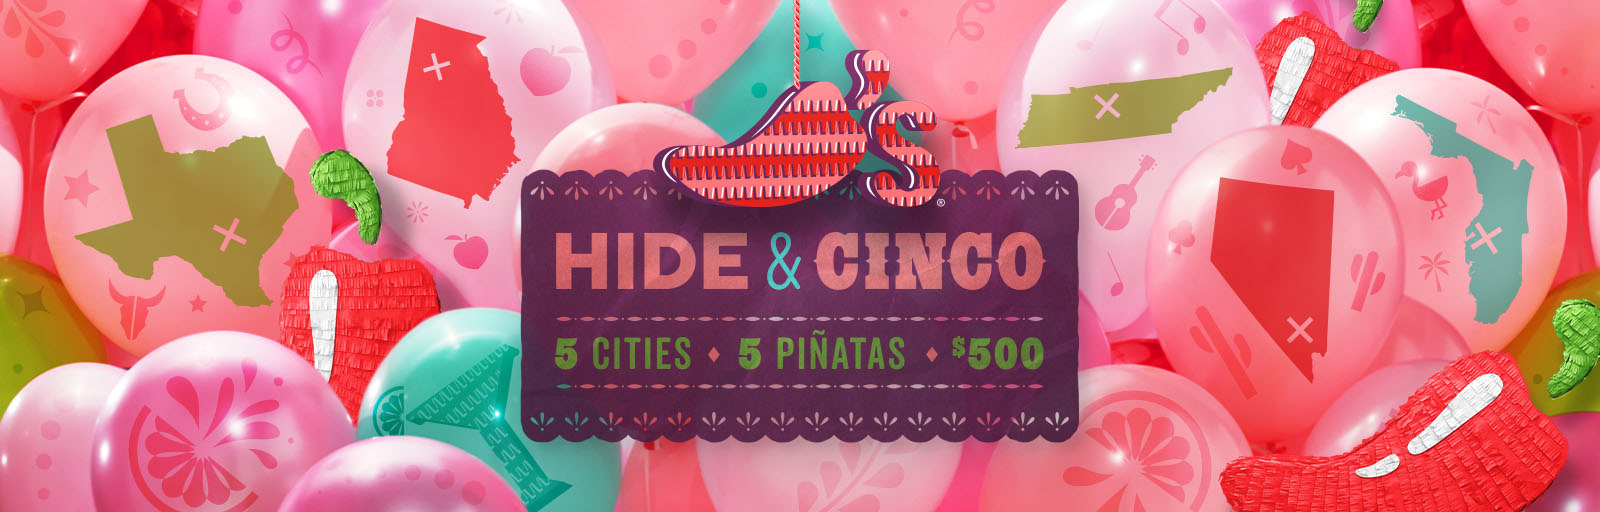 Hide and Cinco, Hero banner saying 500 dollars in 5 pinatas in 5 cities